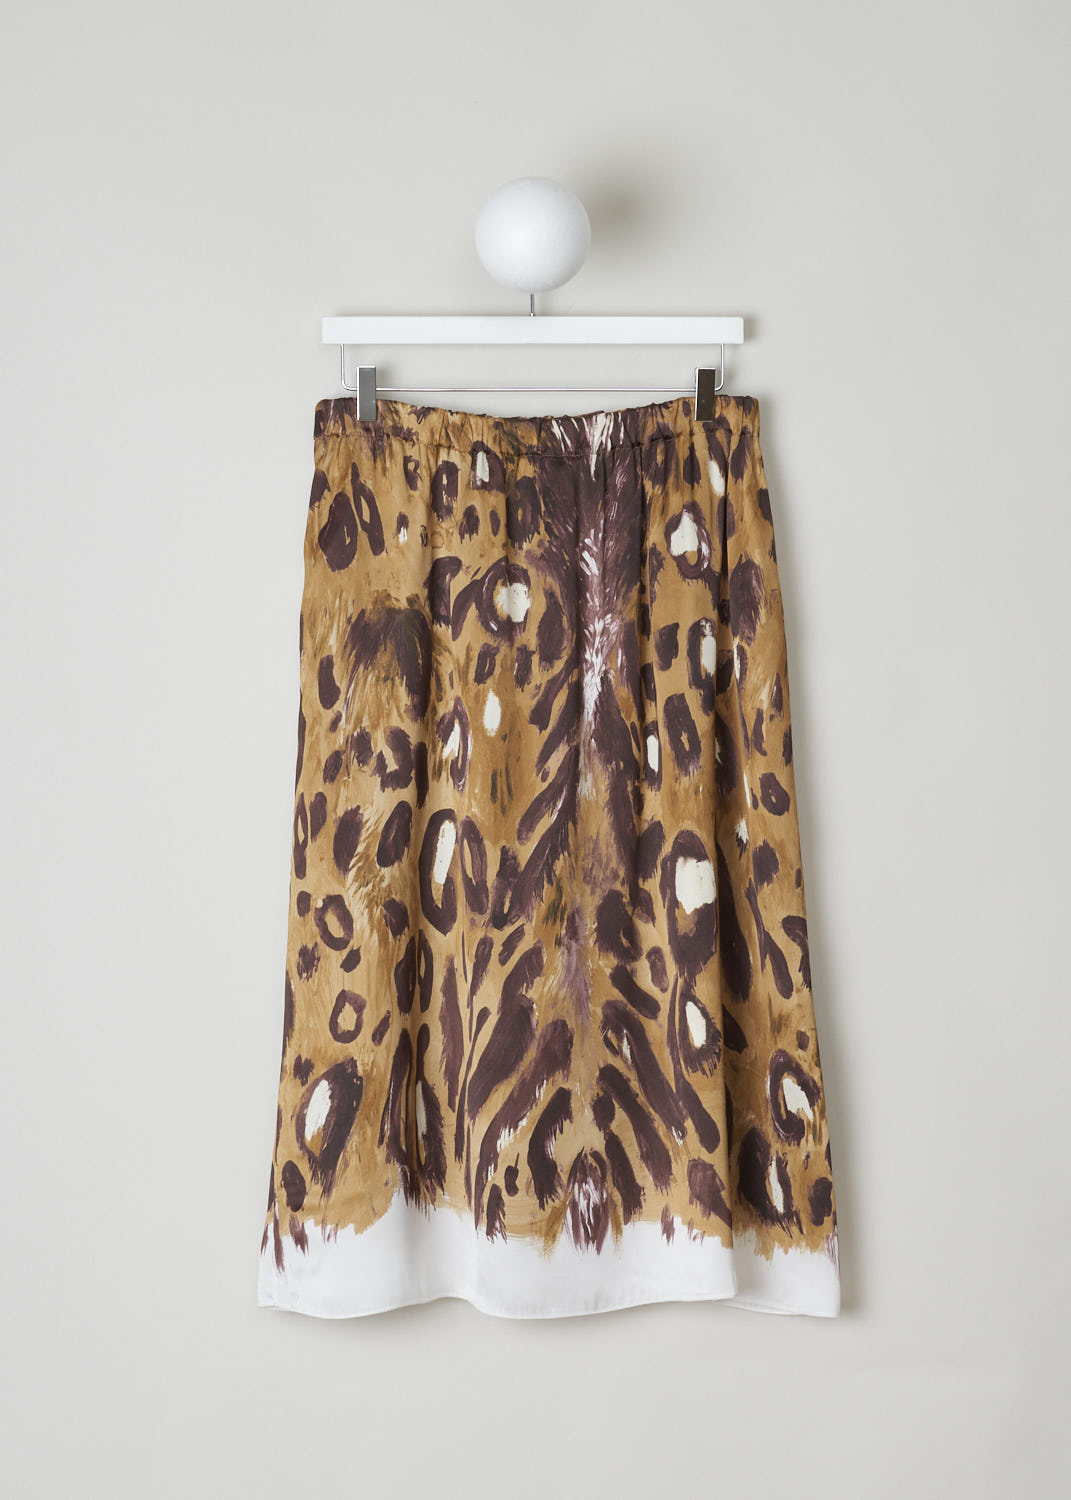 MARNI, SATIN ANIMAL PRINT MIDI SKIRT, Print, Brown, Back,This loose fitting midi skirt is made in a satin animal print. The skirt has an elasticated waistline for a comfortable fit. 
